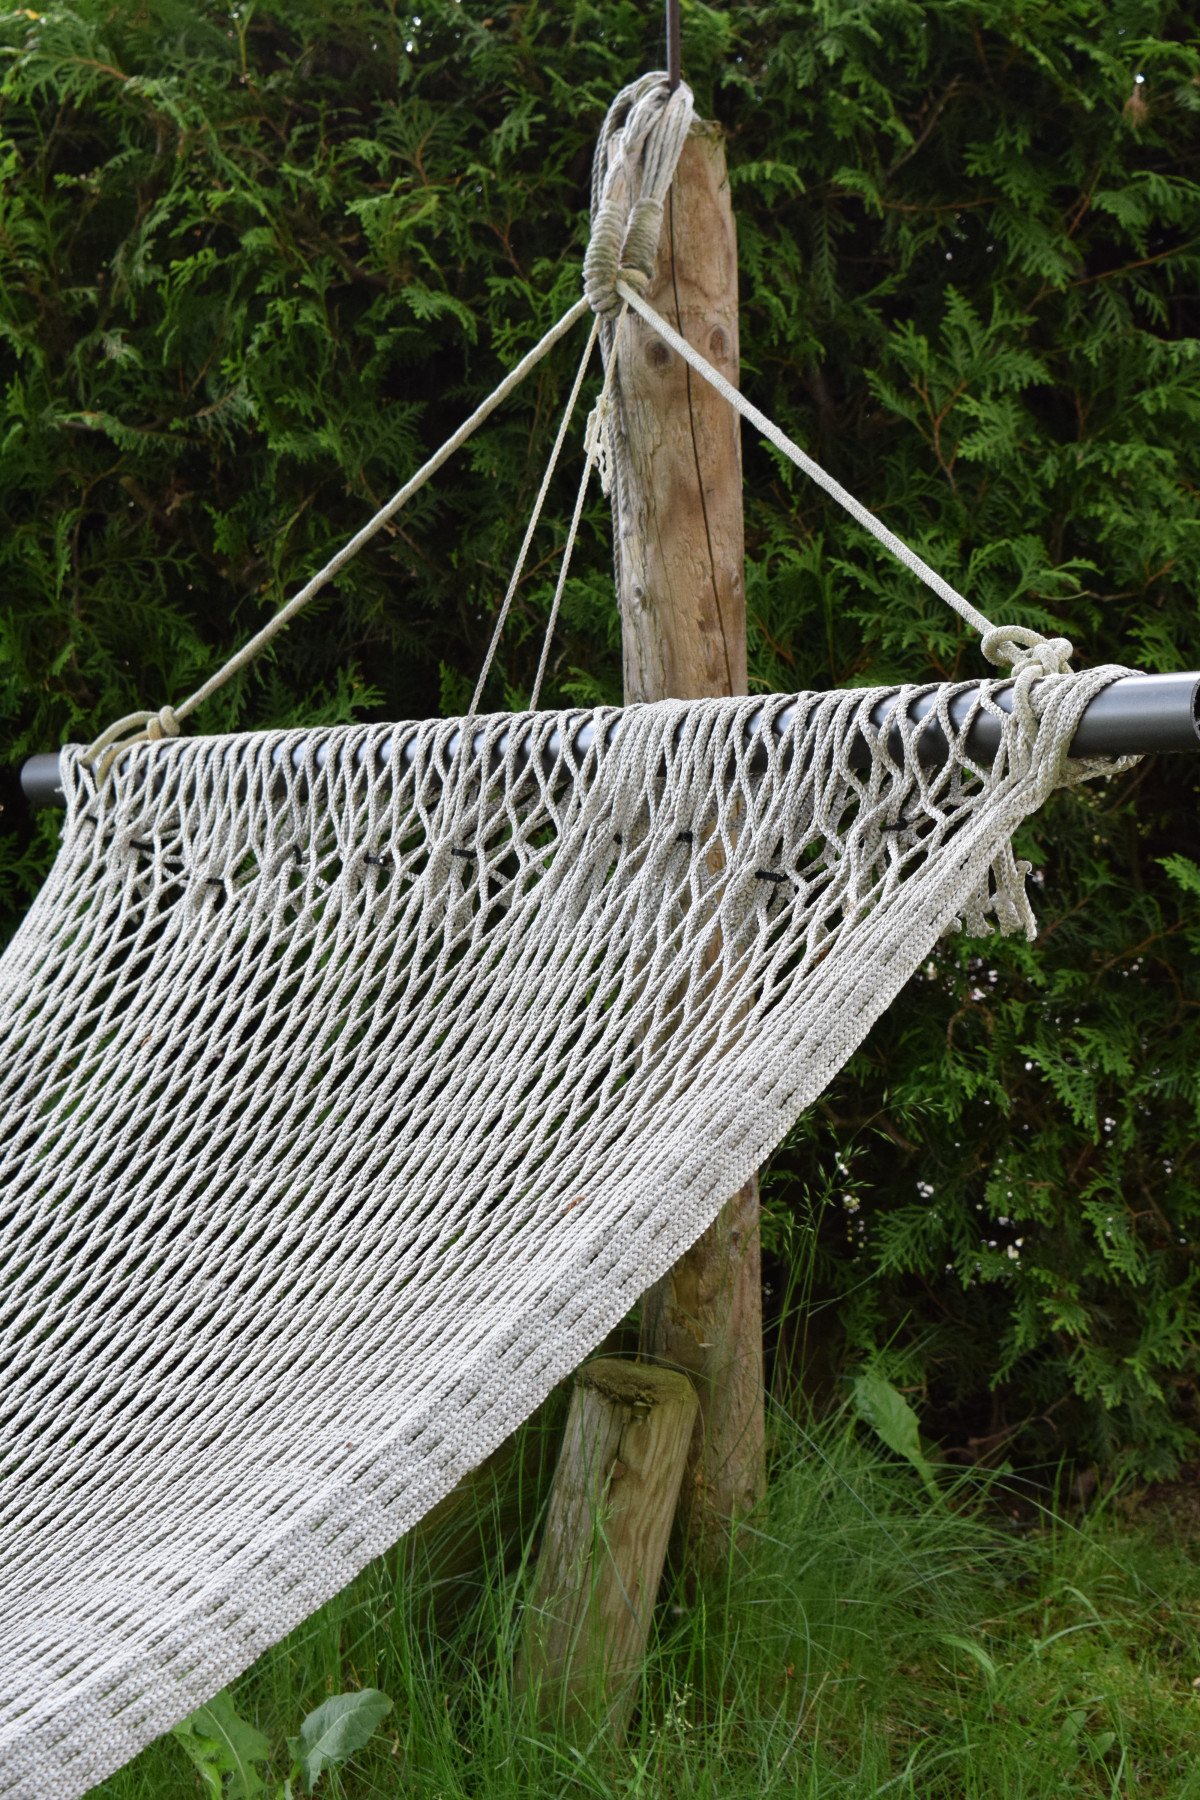 White hammock hung on a tree stick.